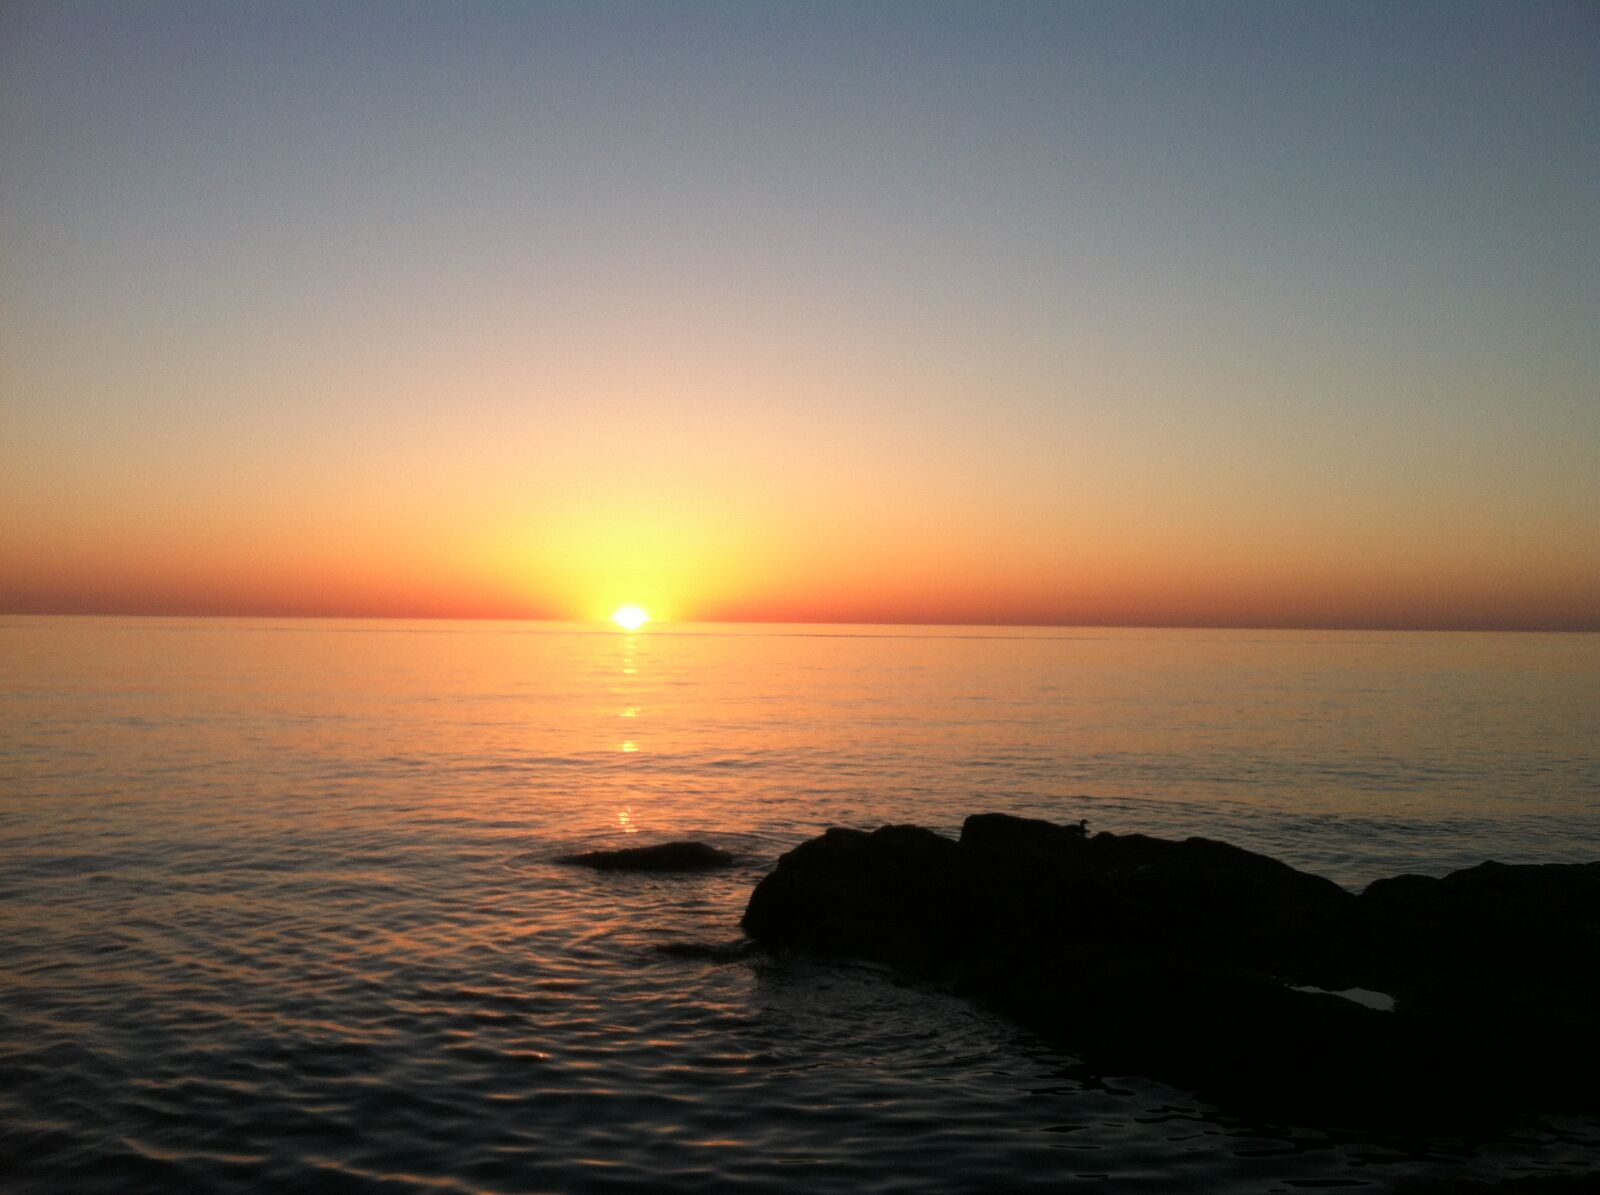 Apple iPhone 4 + iPhone 4 back camera 3.85mm f/2.8 sample photo. Ocean, serenity, sunrise photography